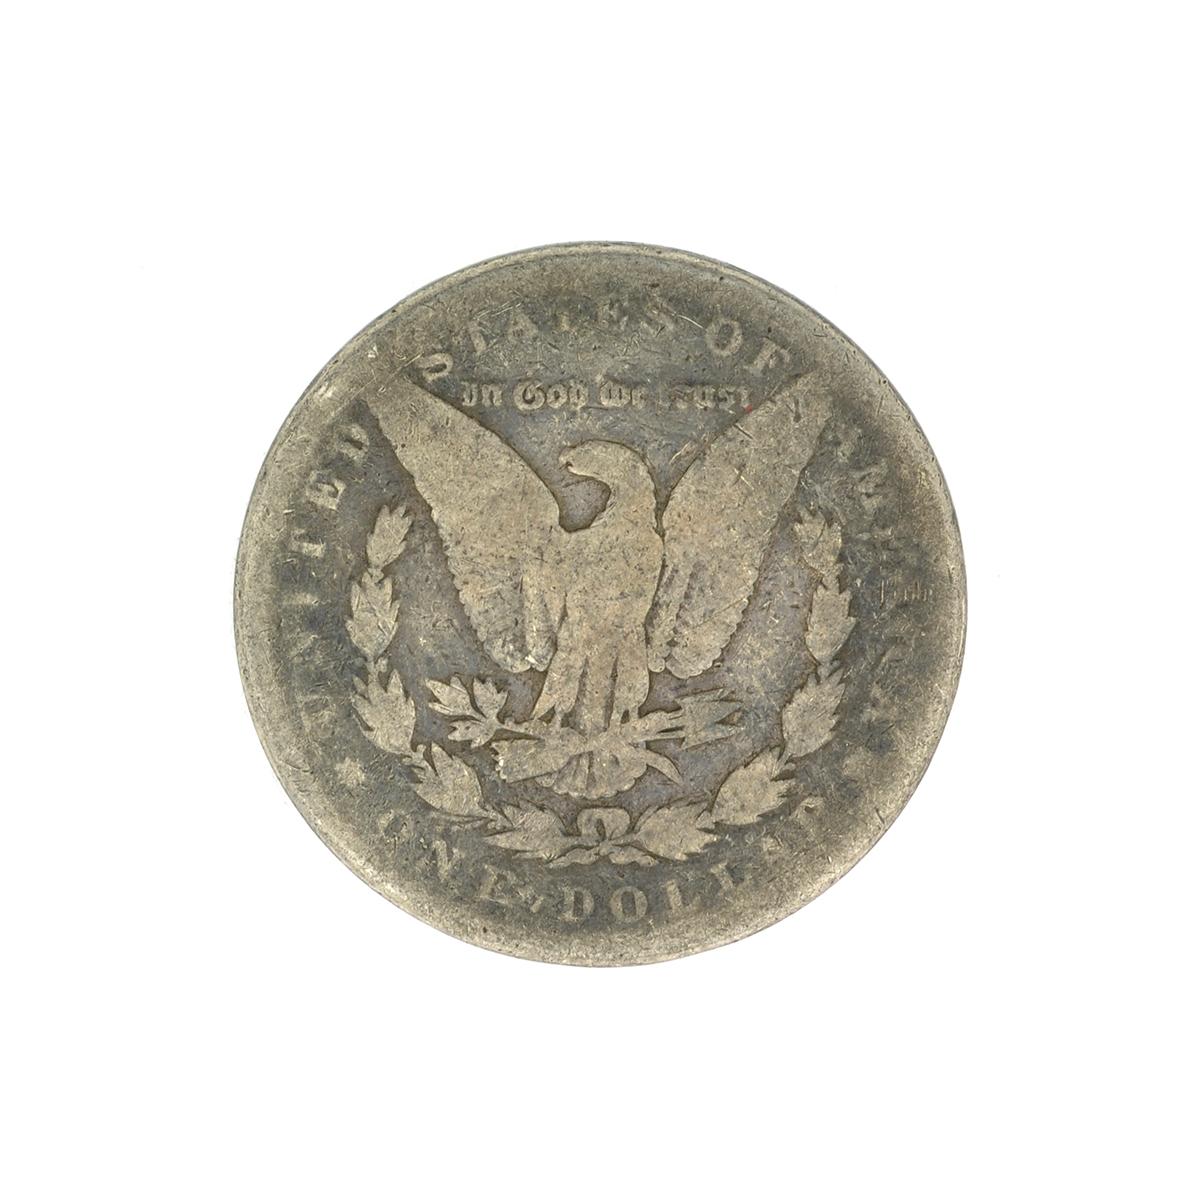 1899 U.S. Morgan Silver Dollar Coin